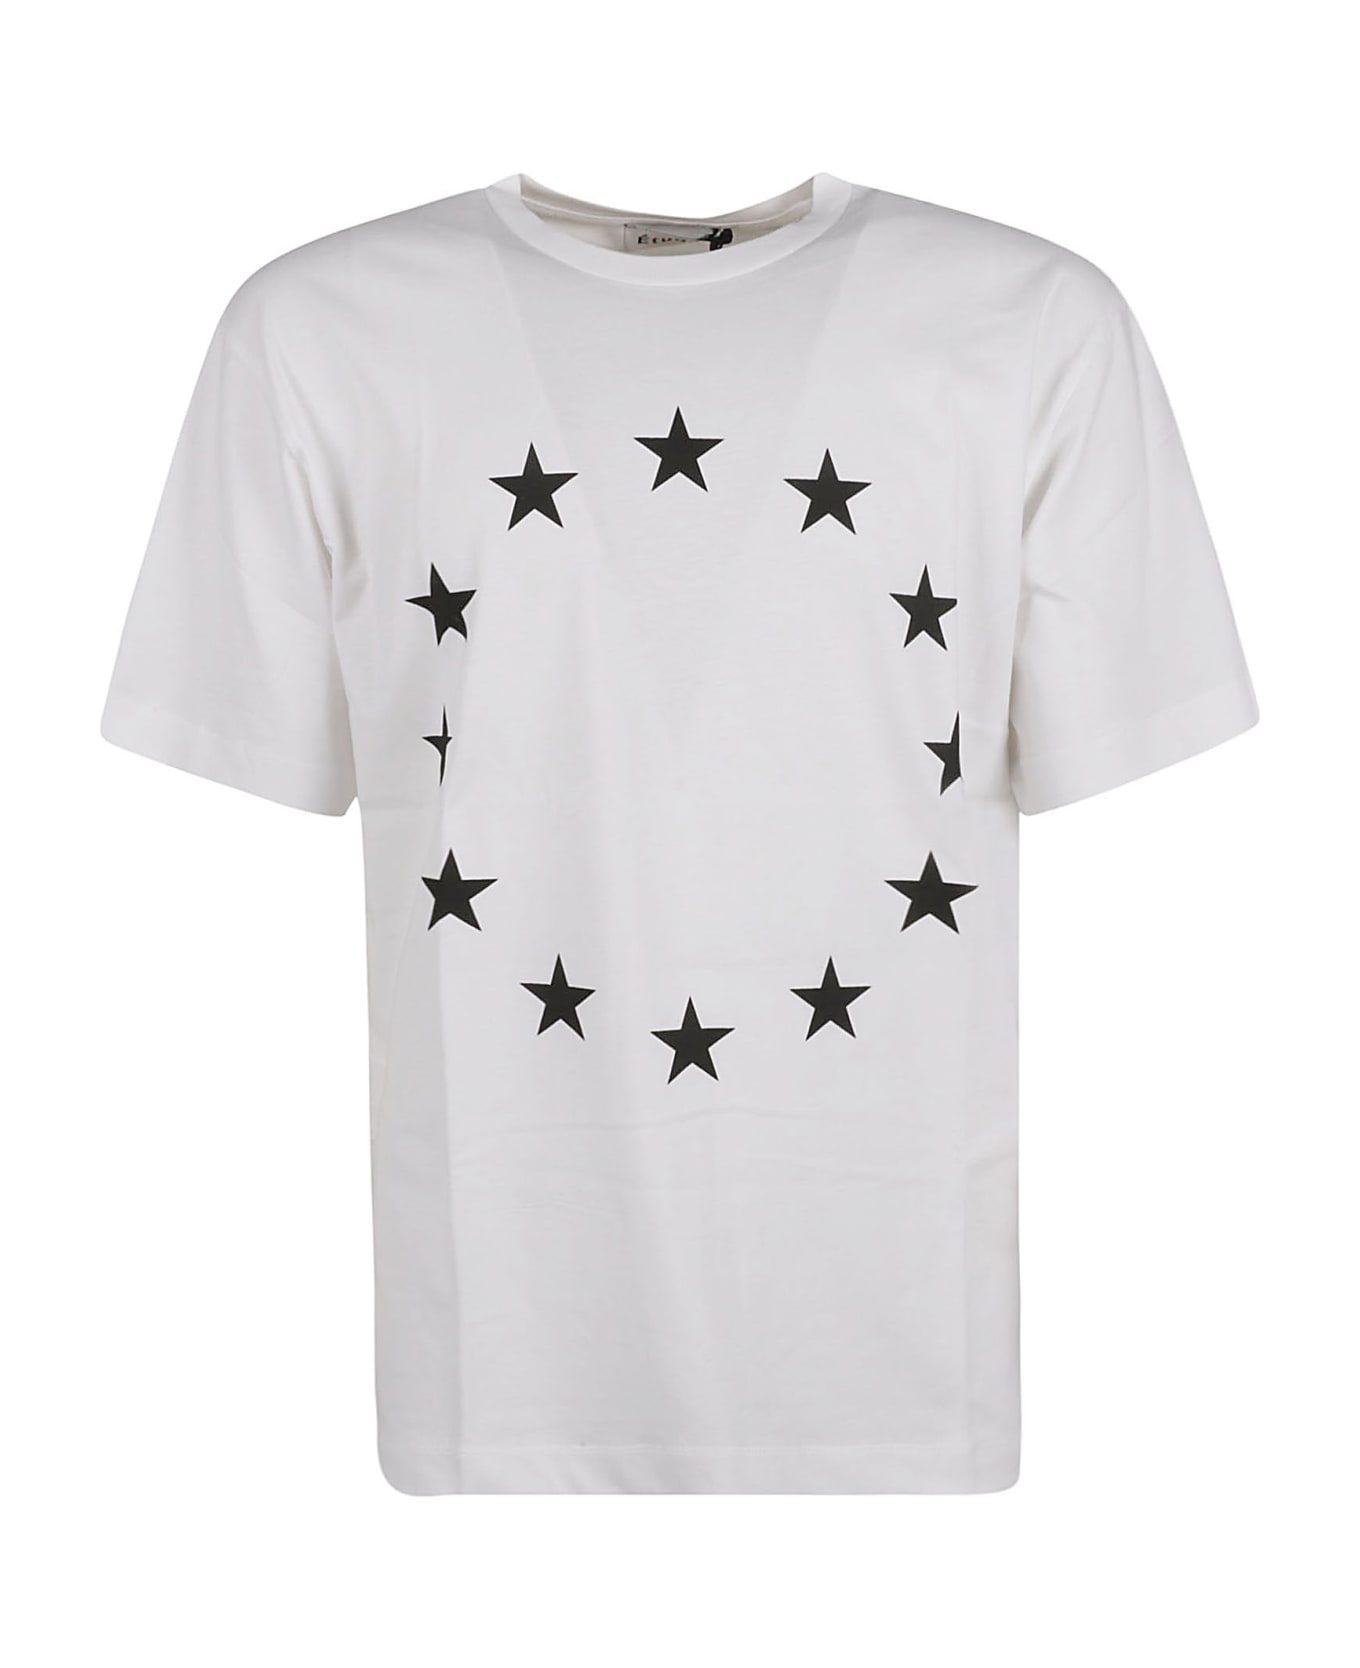 Études Round Star T-shirt - White